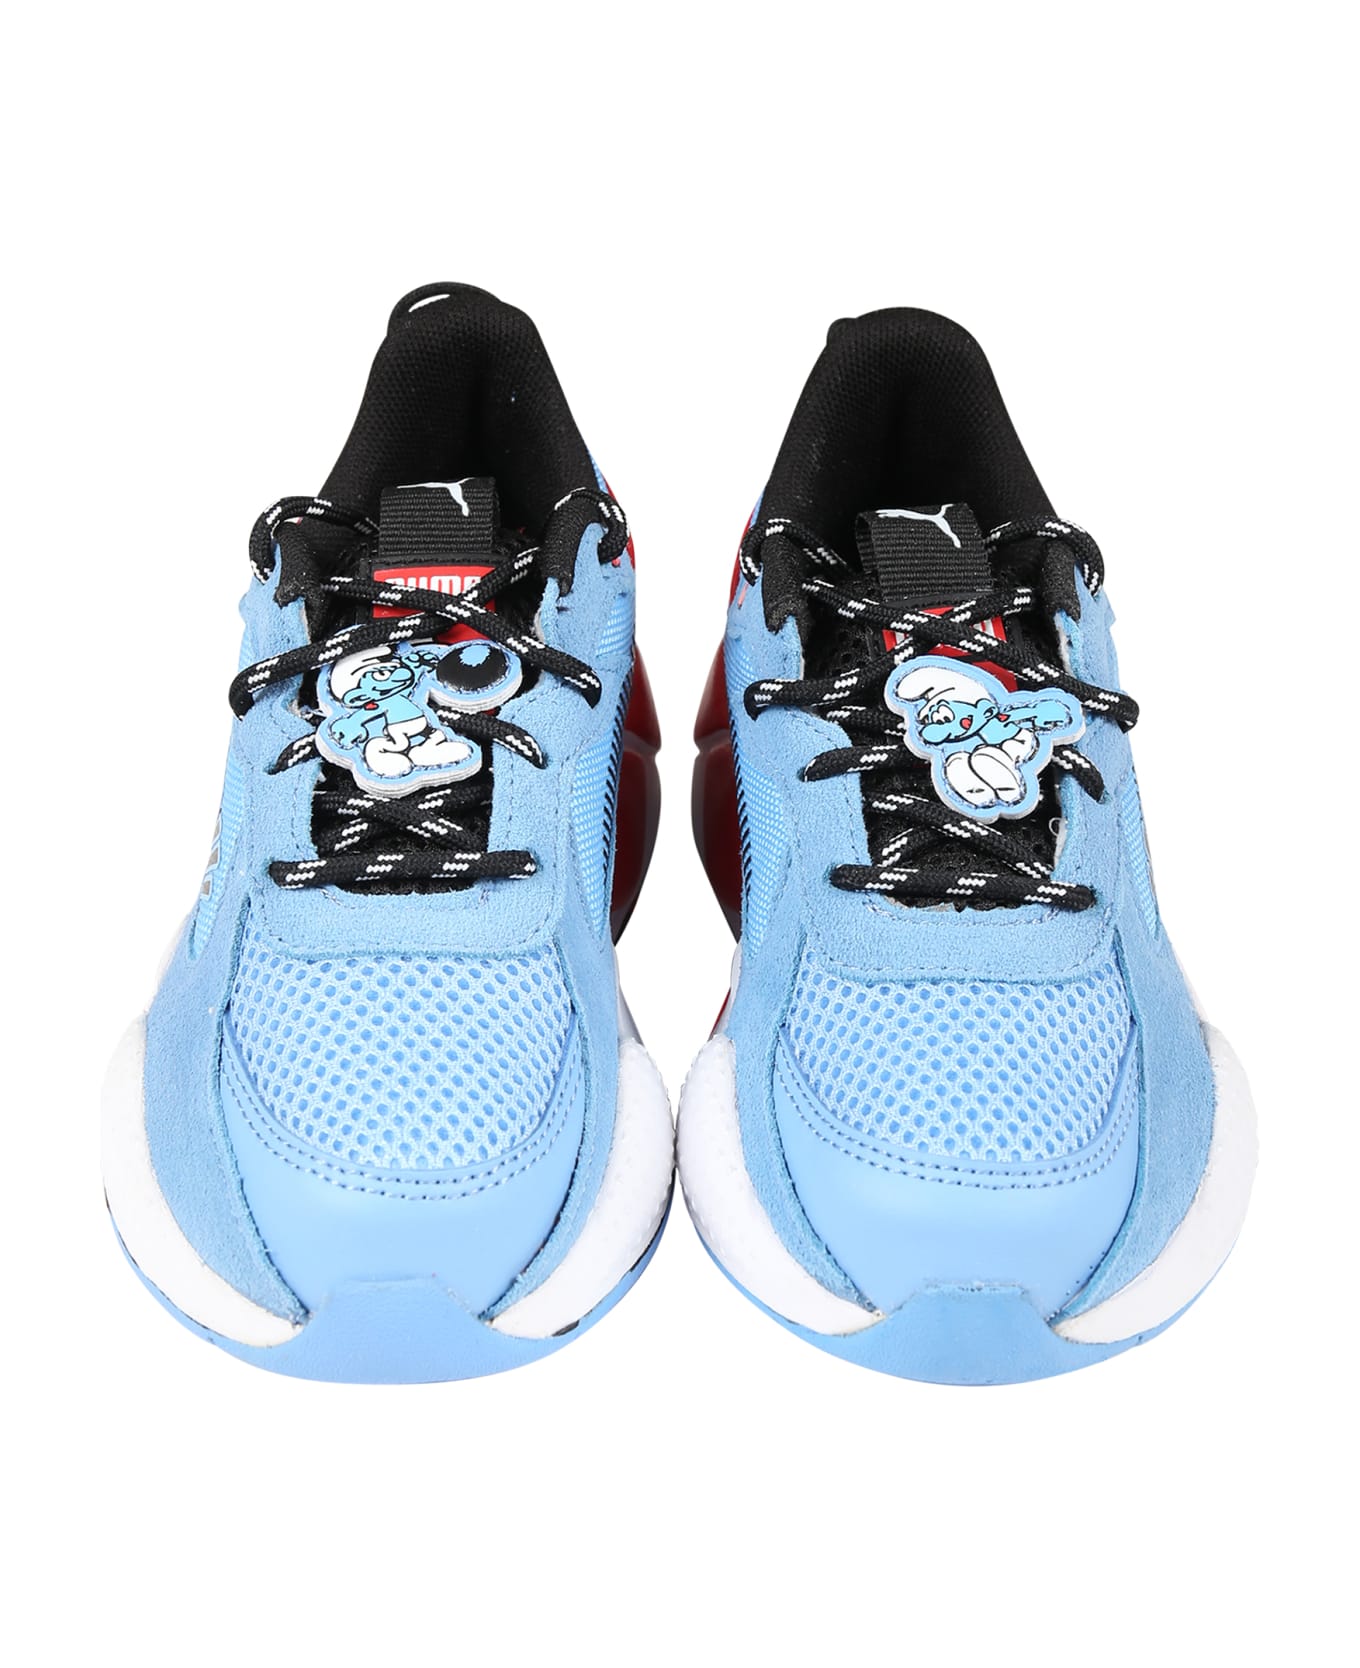 Puma Light Blue Rs-x The Smurfs Ps Sneakers For Boy - Light Blue